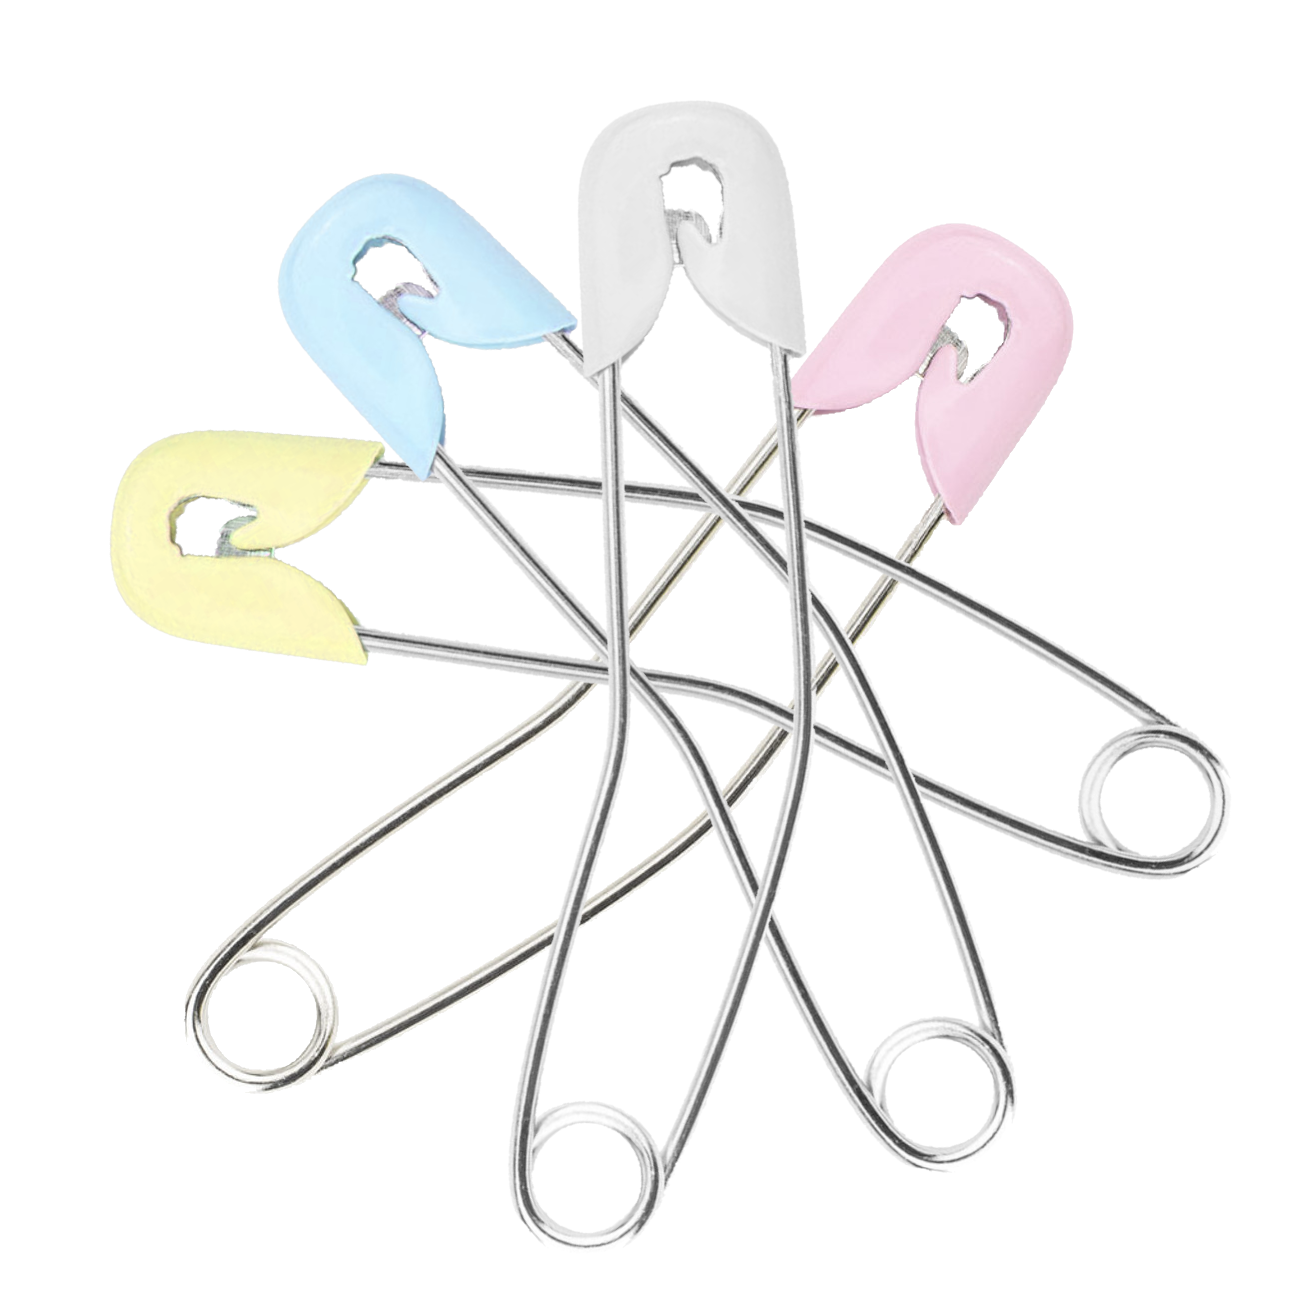 InControl - Slide Locking Diaper Pins (10-Pack) Pink